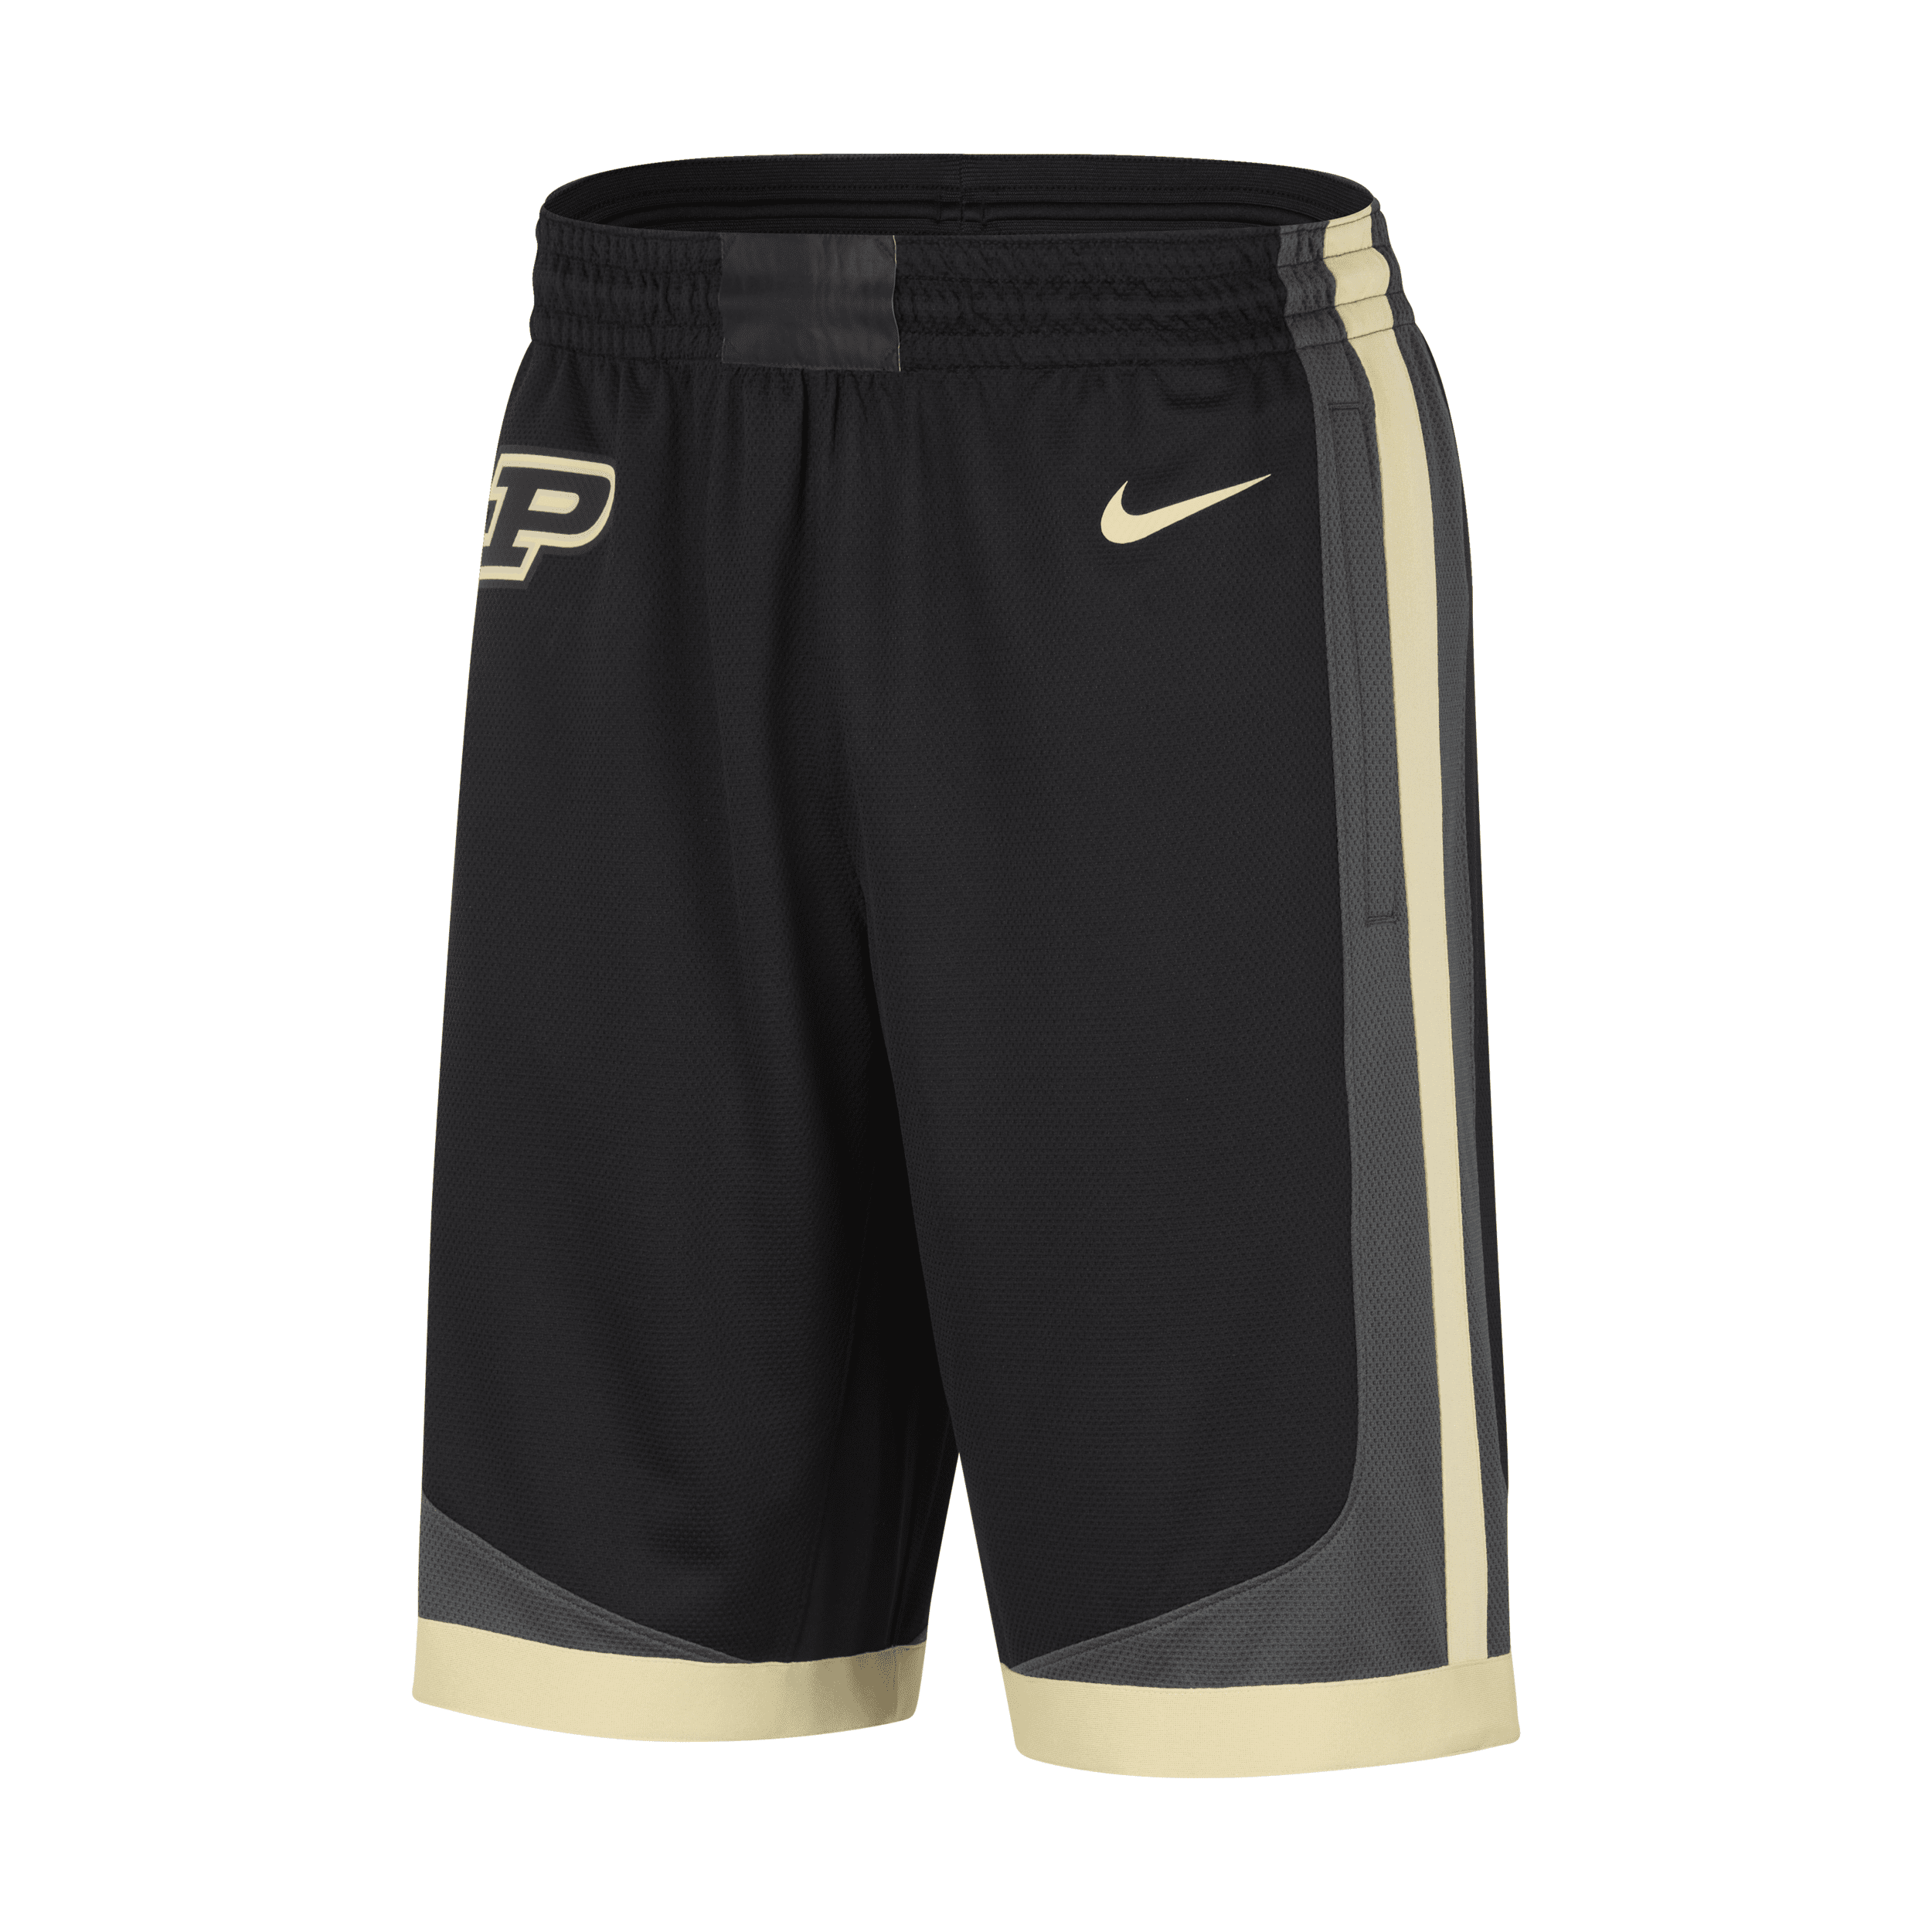 Nike Men's College (purdue) Replica Basketball Shorts In Black